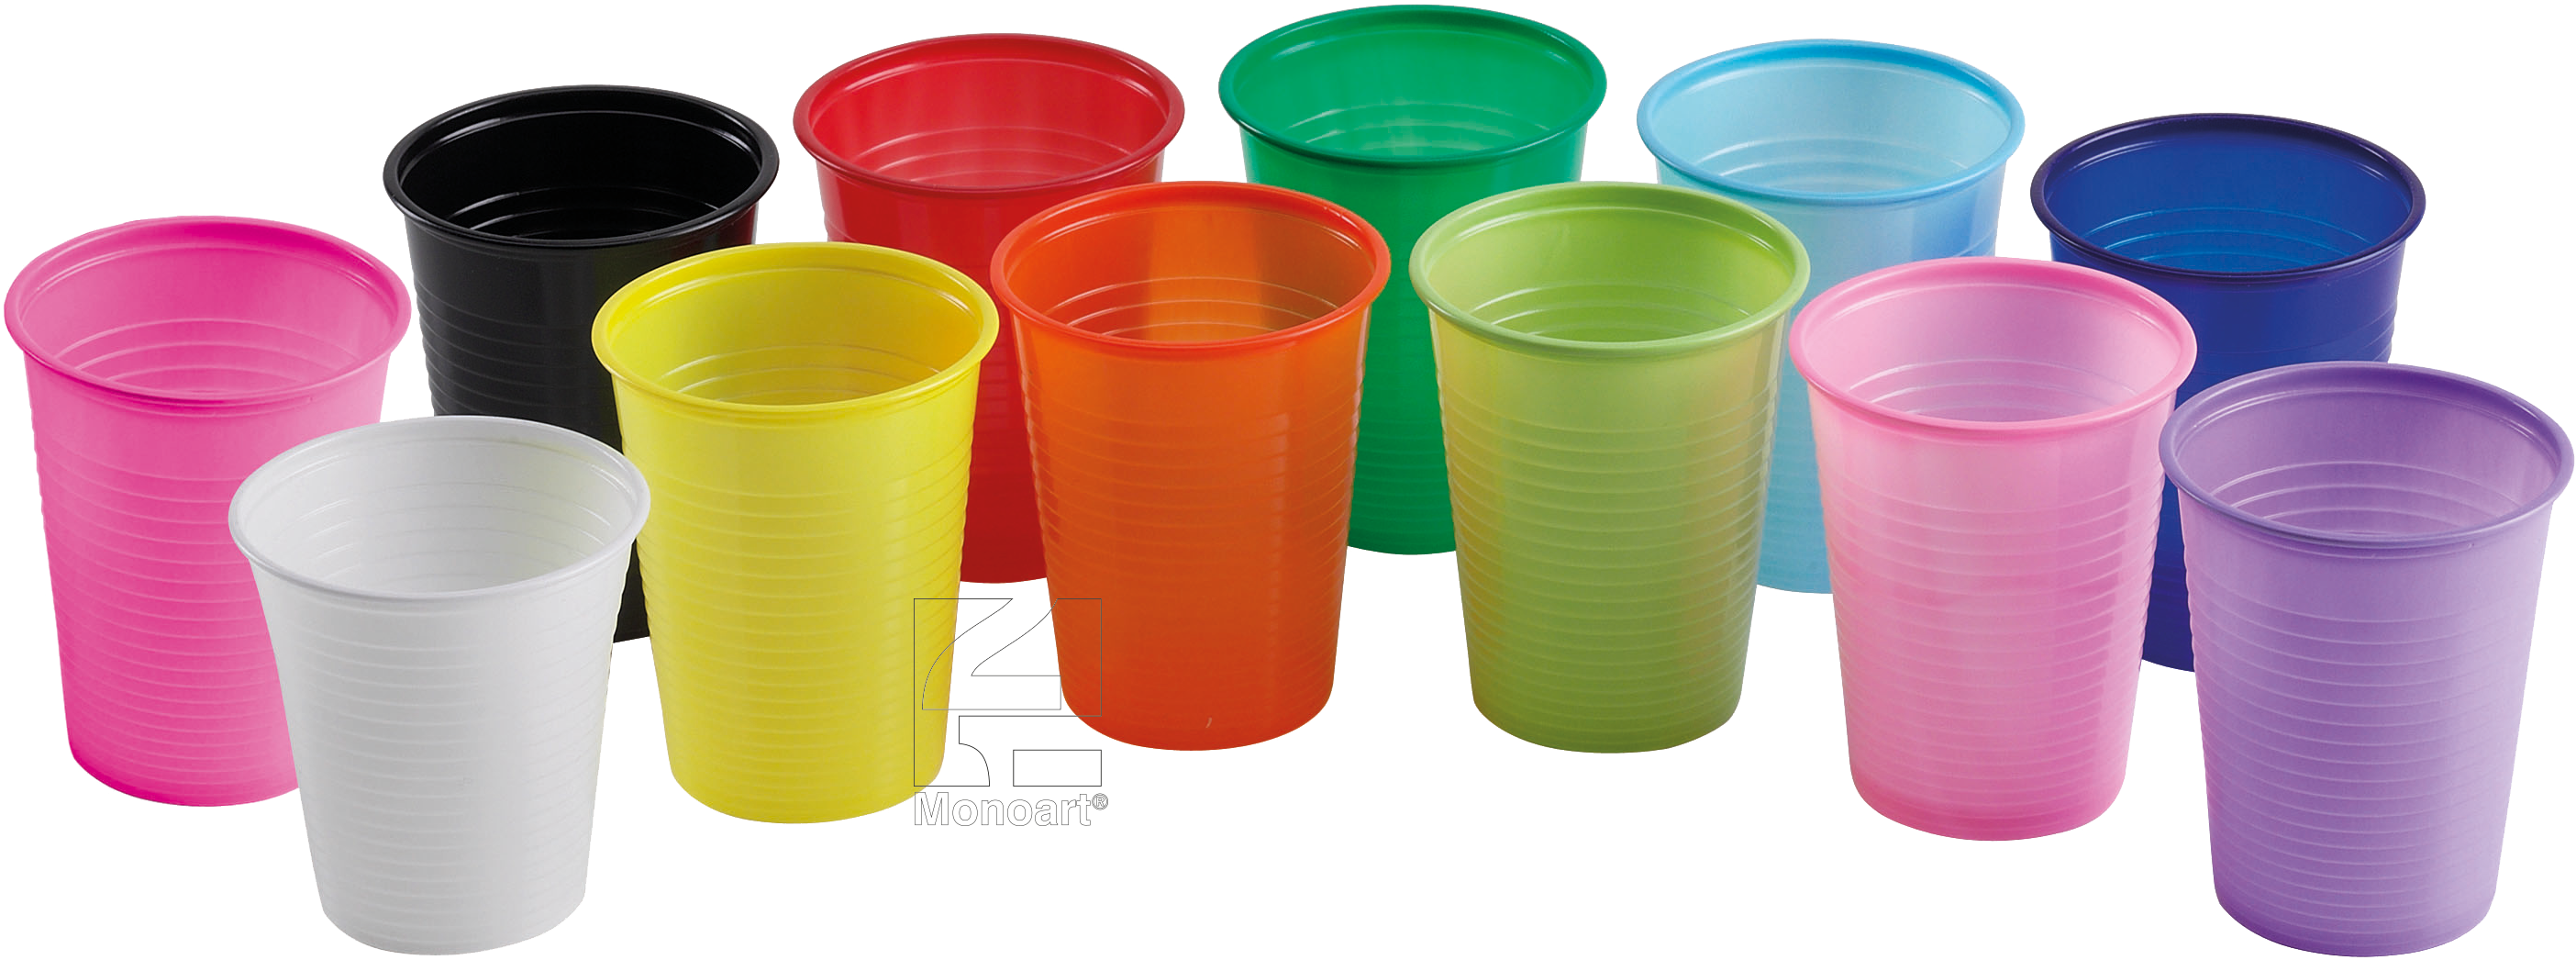 Download Plain Plastic Cup Monoart Bag Vasos Transparentes Azules Plasticos Png Image With No Background Pngkey Com